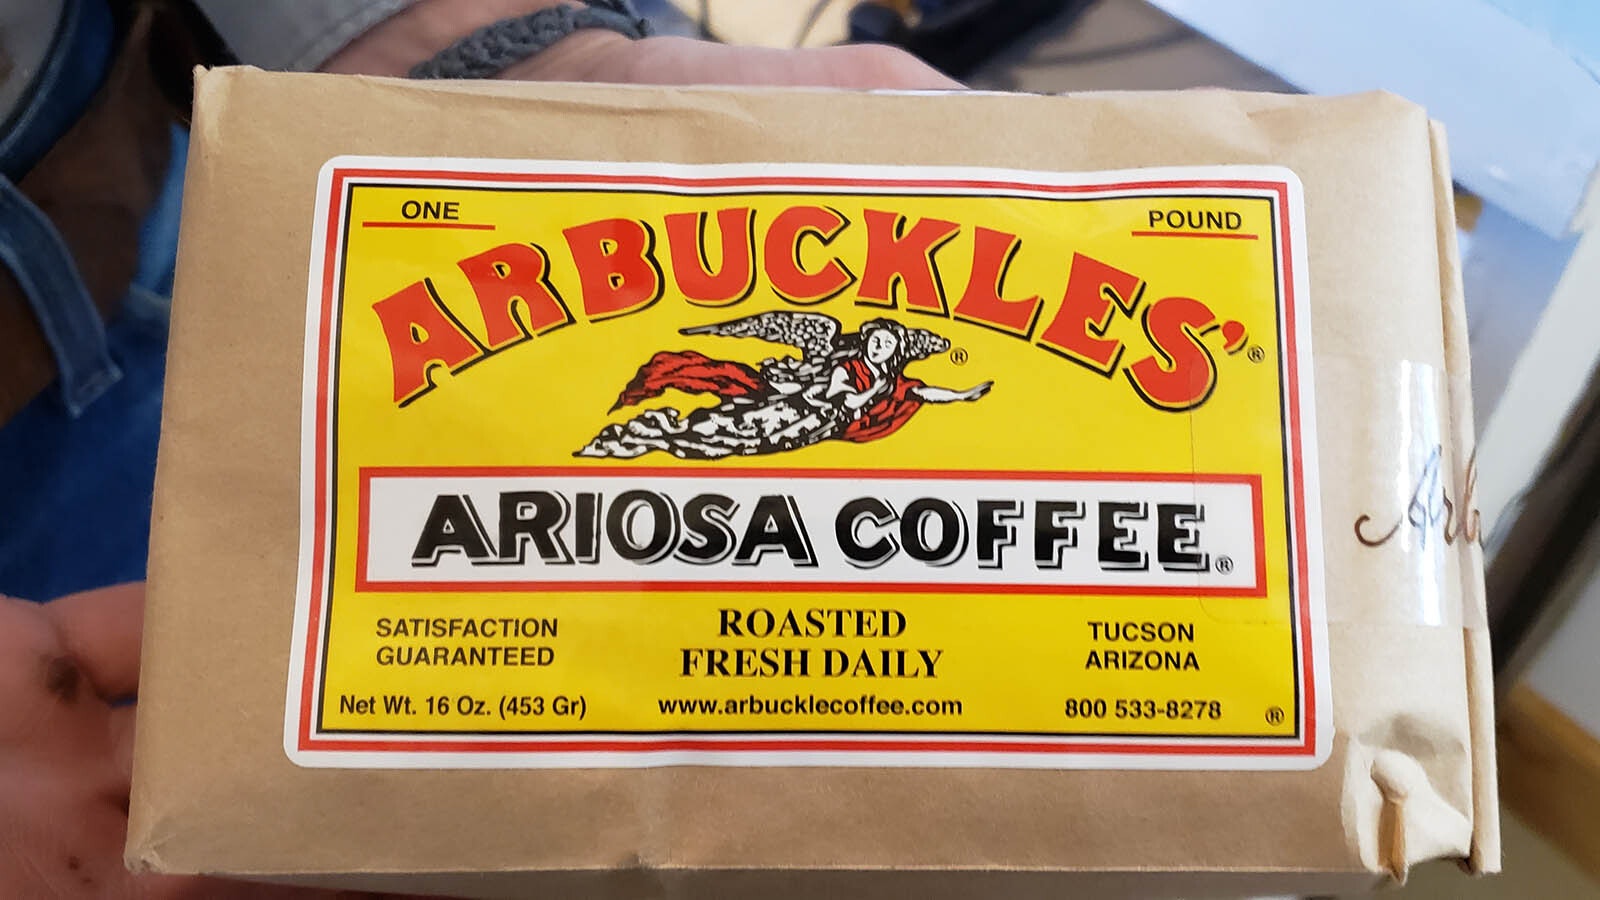 Arbuckles coffee